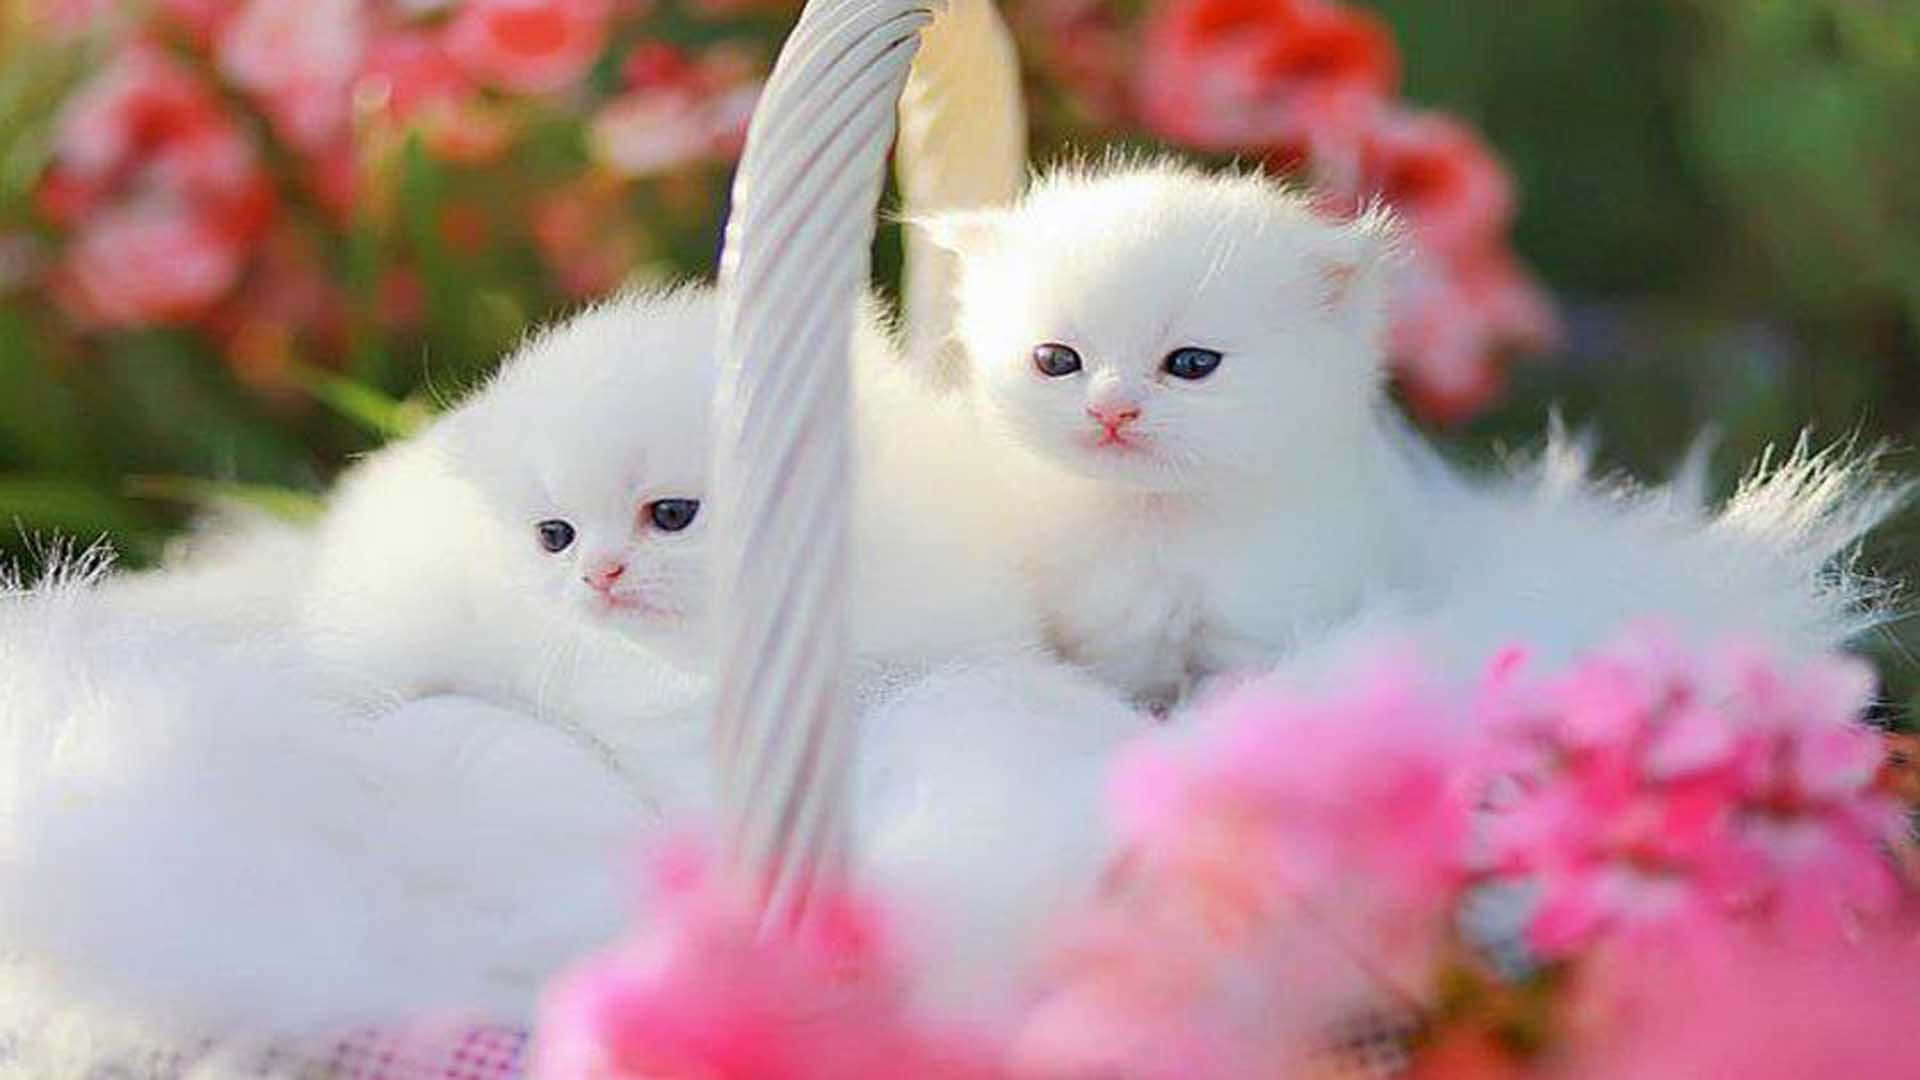 "Adorable Persian Kittens Snuggling in a Basket" Wallpaper